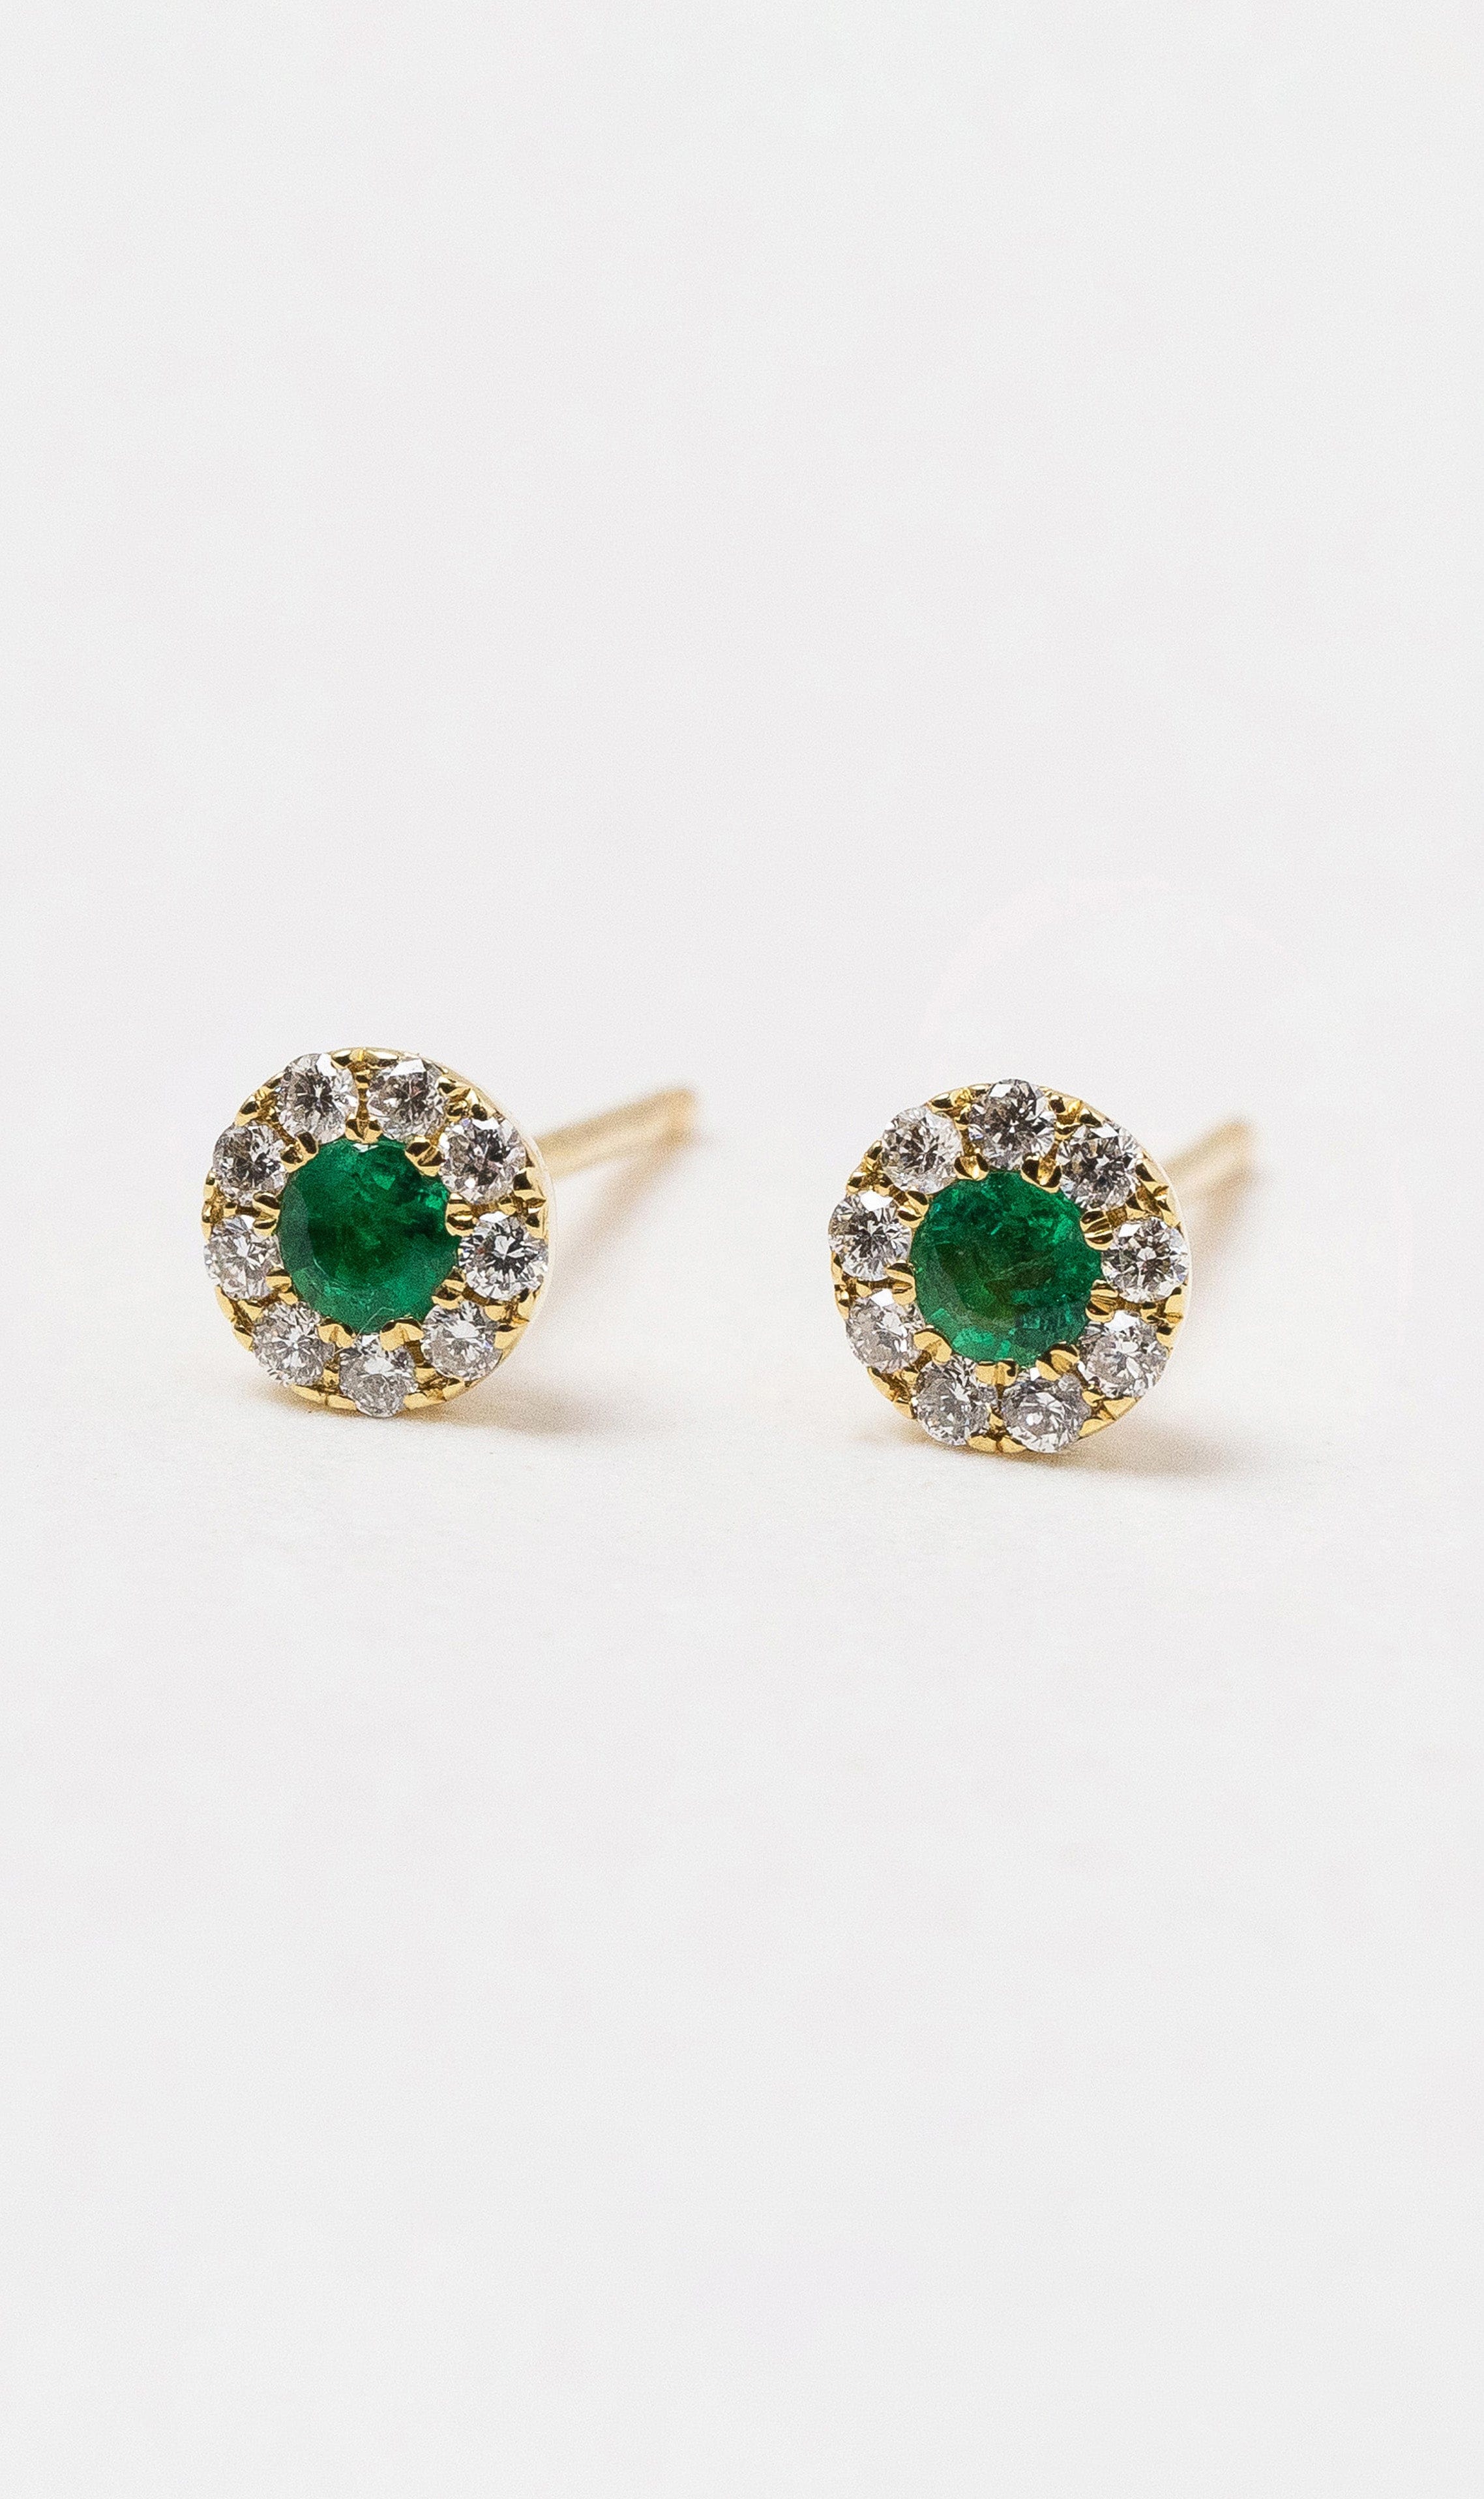 Hogans Family Jewellers 18K YG Petite Emerald Halo Stud Earrings